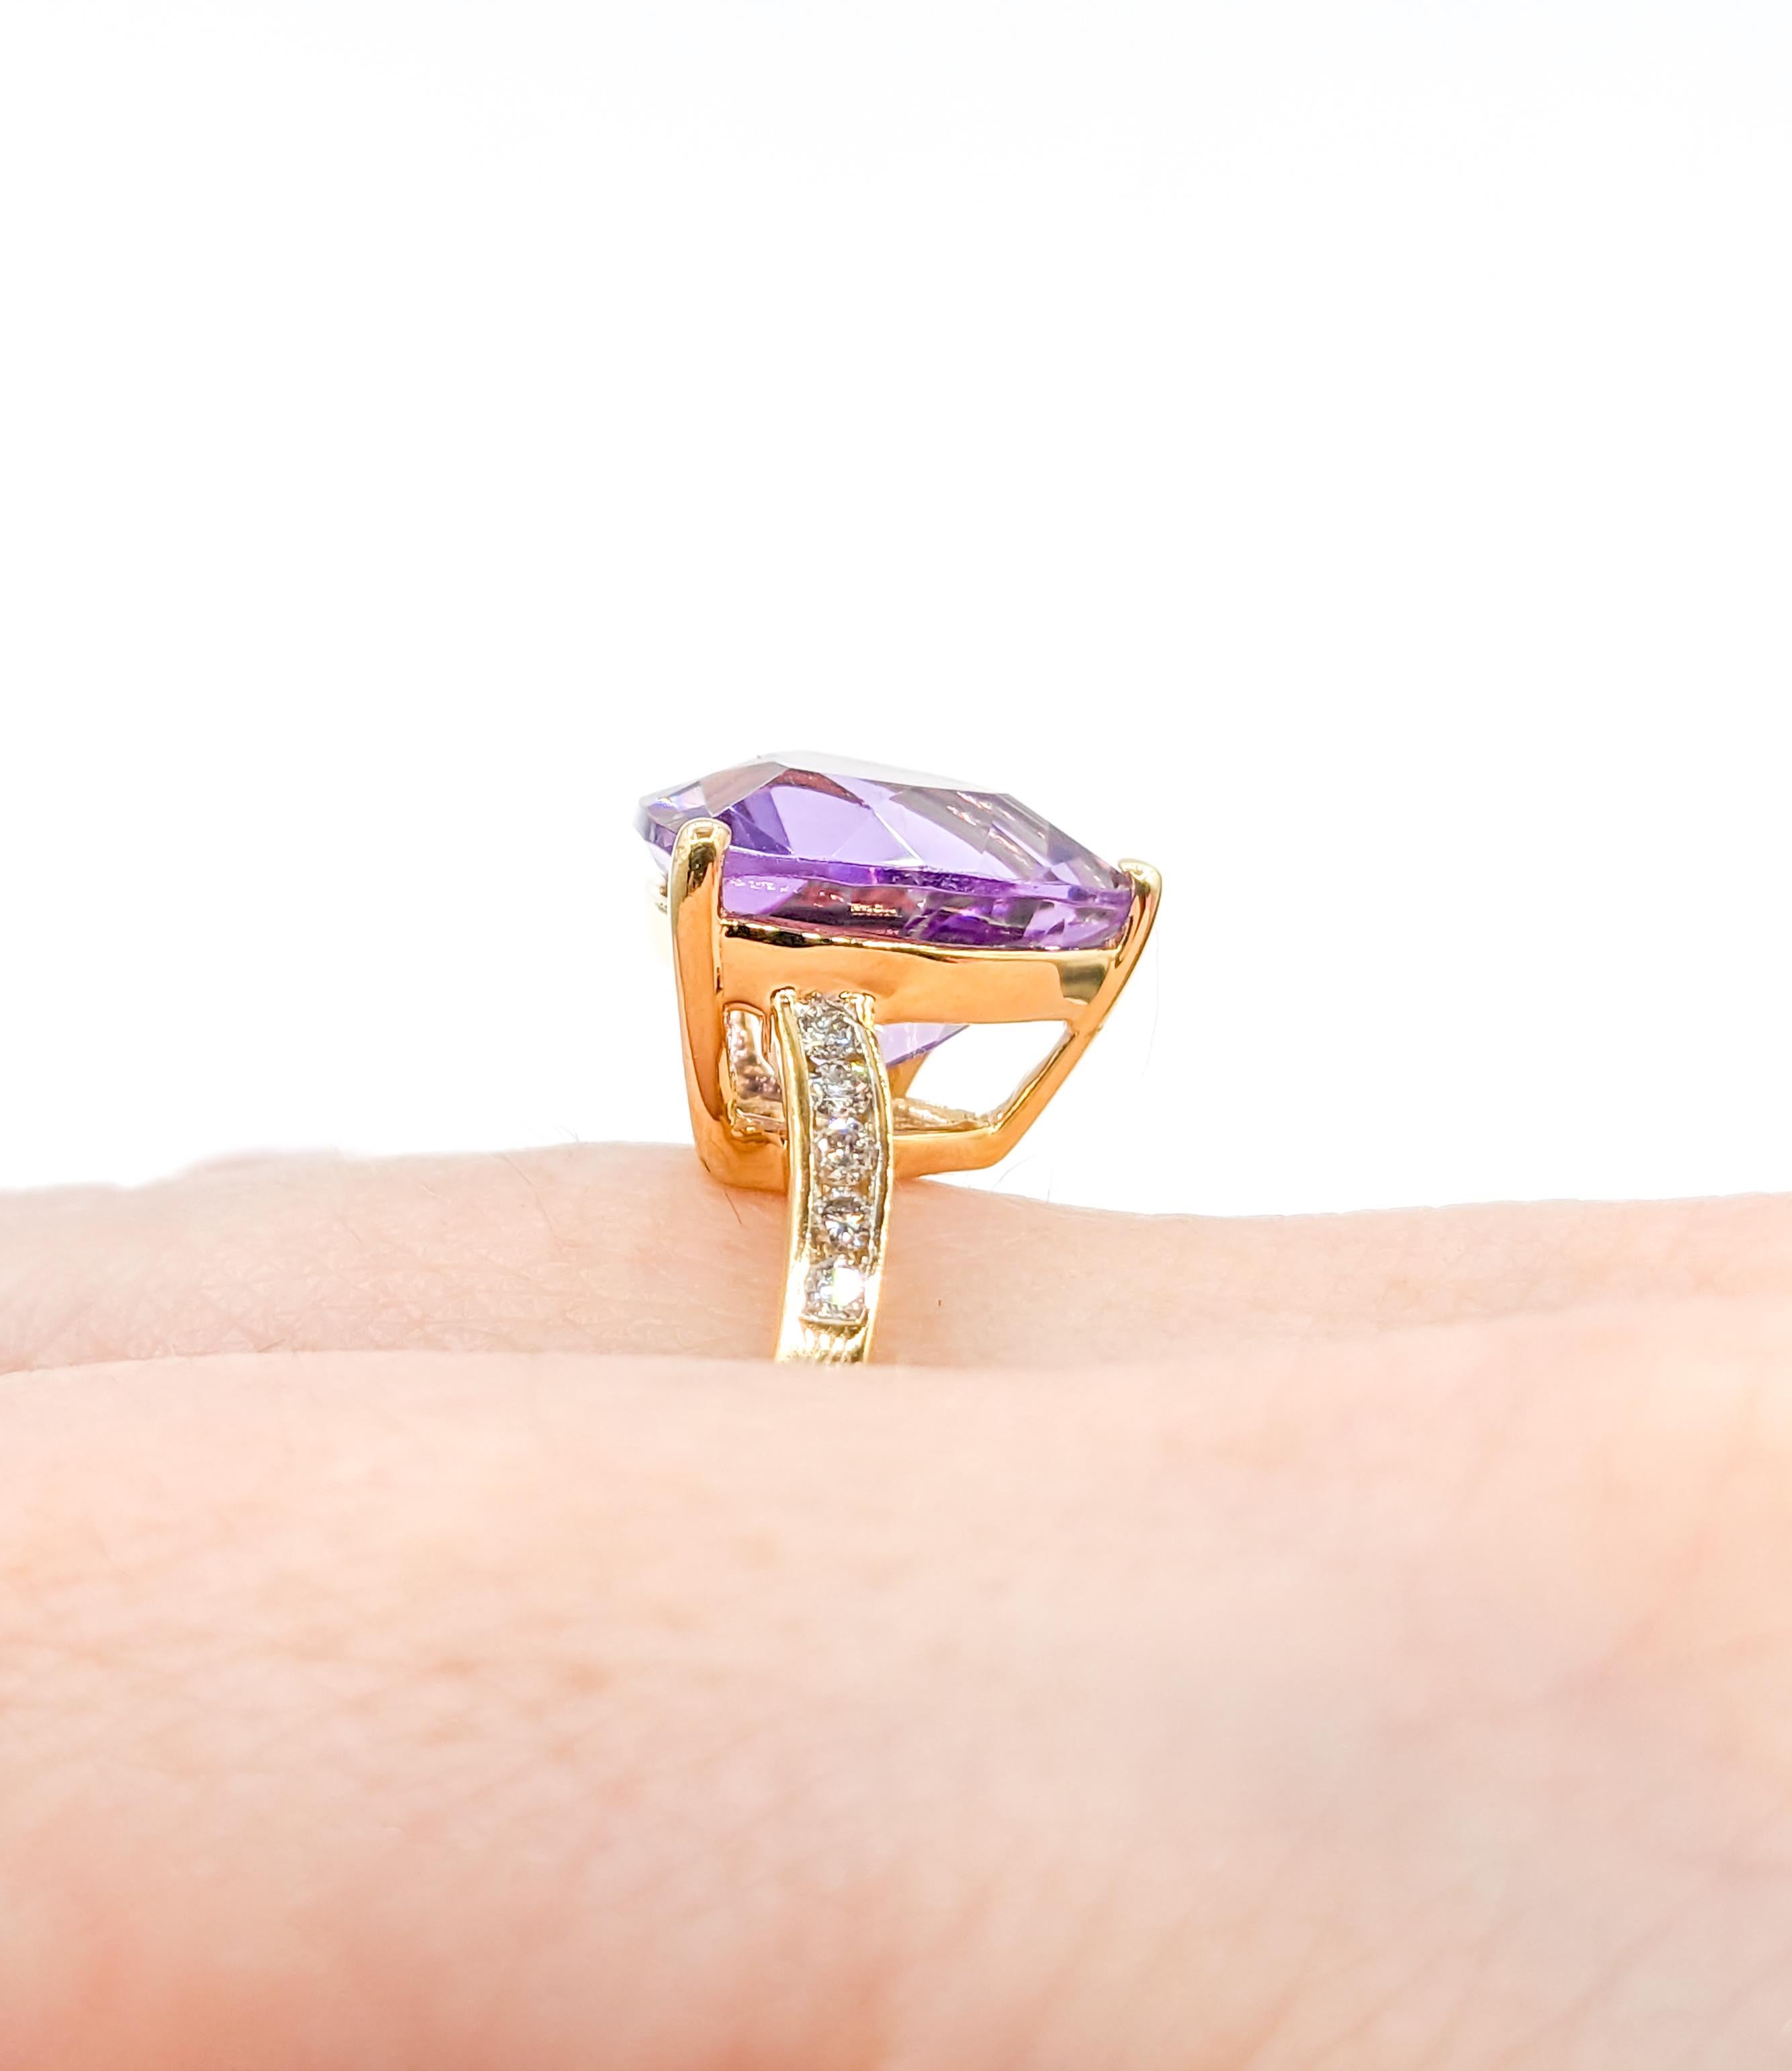 Women's Trillion Cut Amethyst & Diamond Ring in 14K Gold For Sale